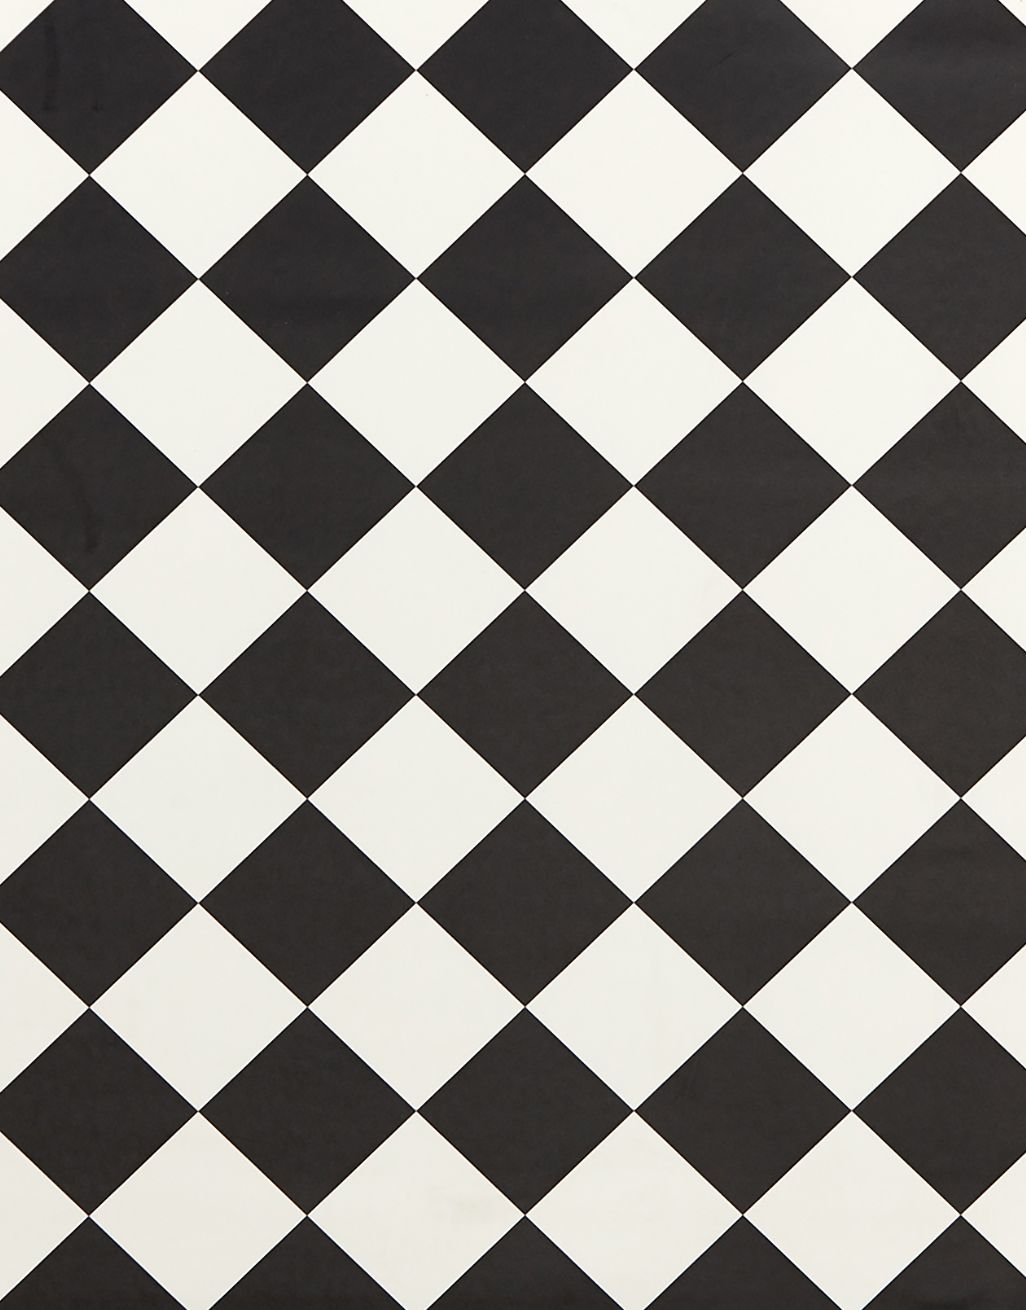 Monochrome - Chessboard 4